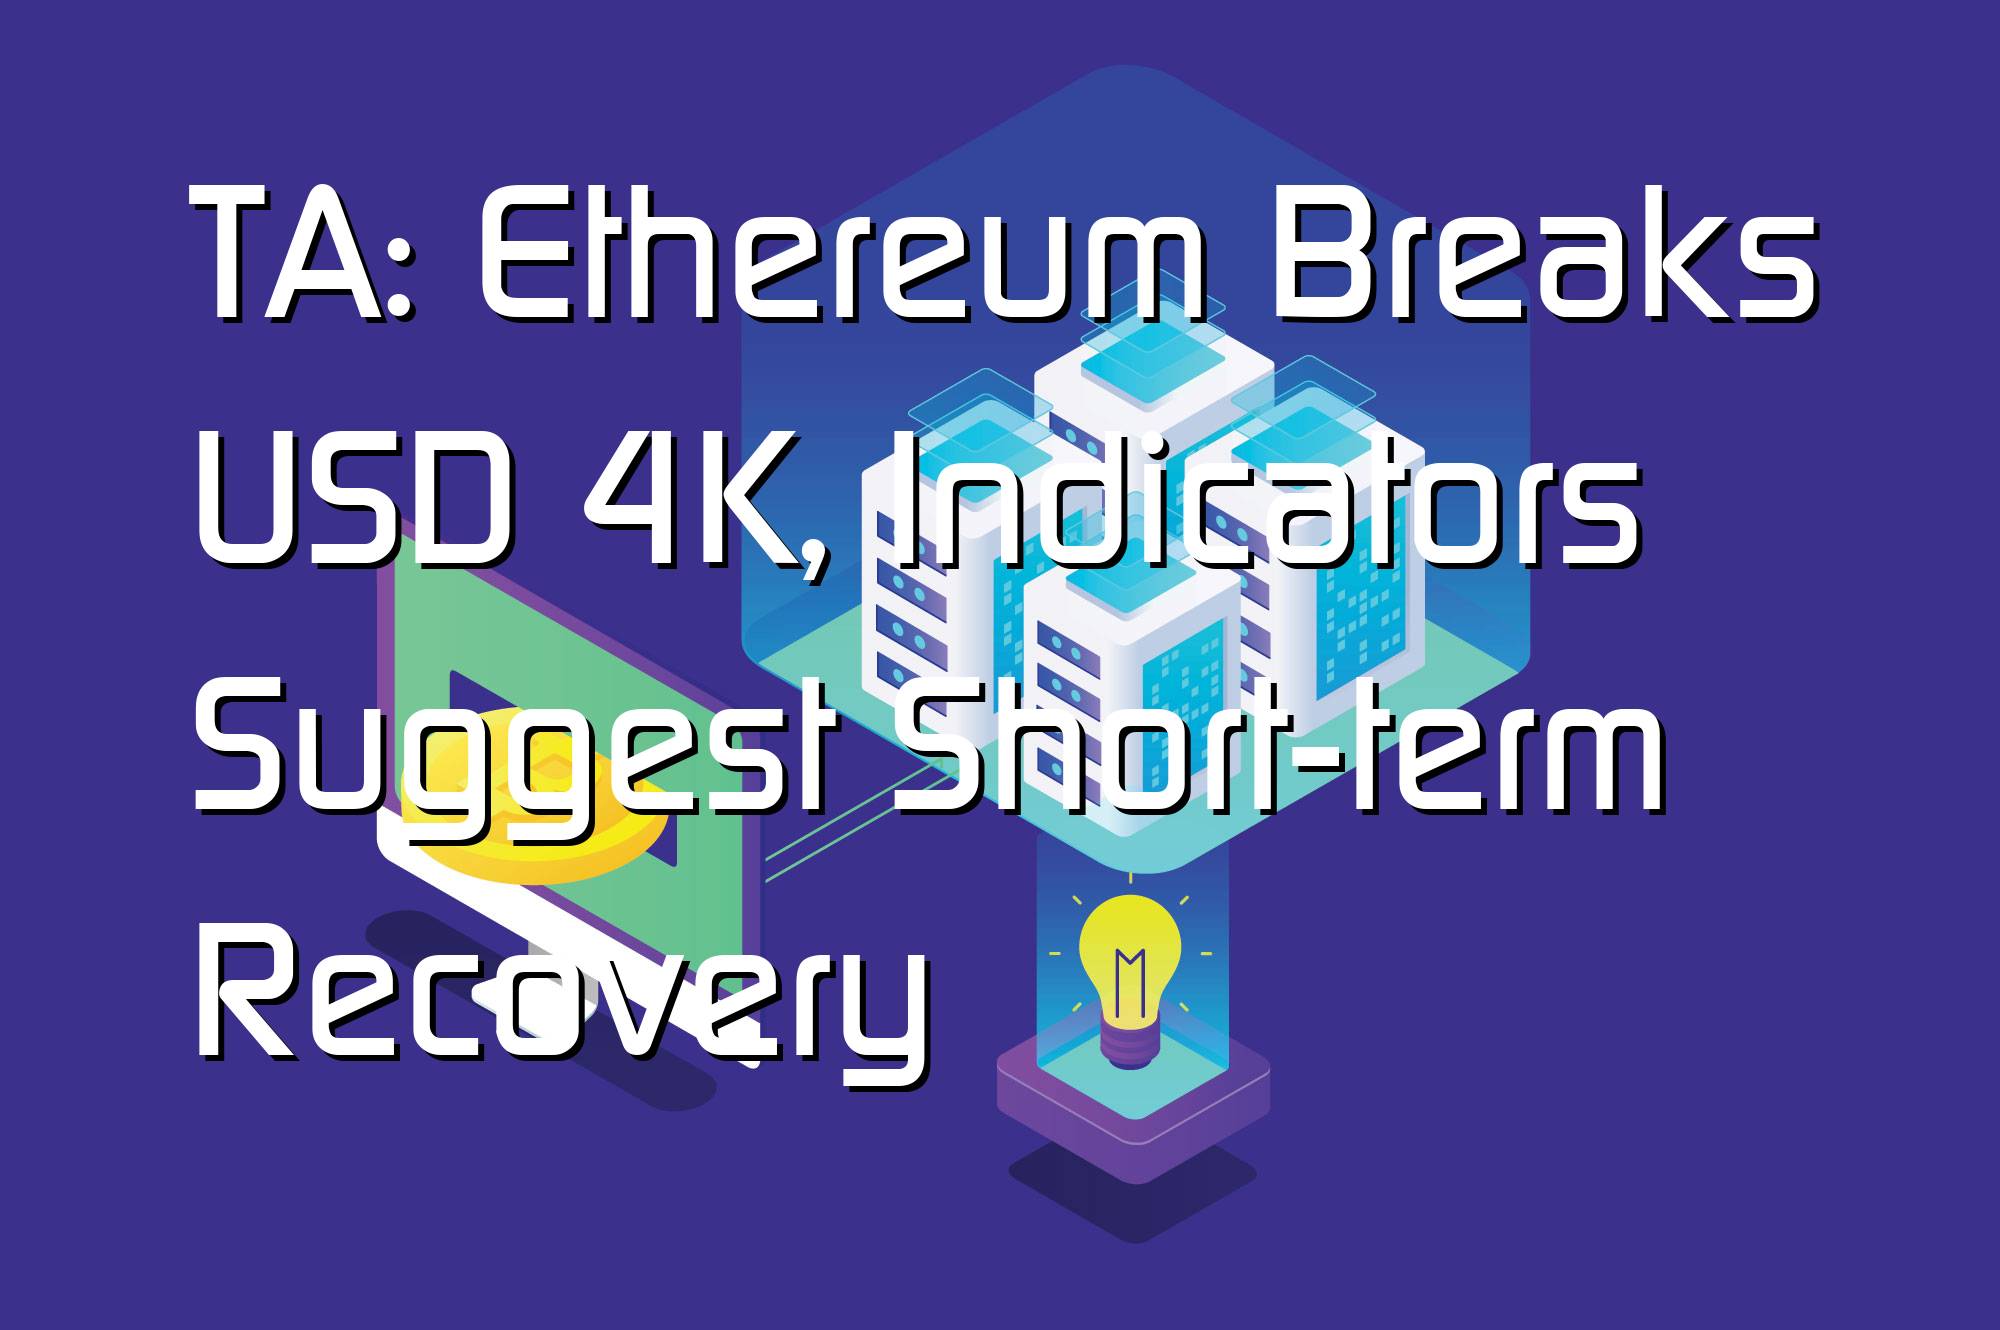 @$56242: TA: Ethereum Breaks USD 4K, Indicators Suggest Short-term Recovery